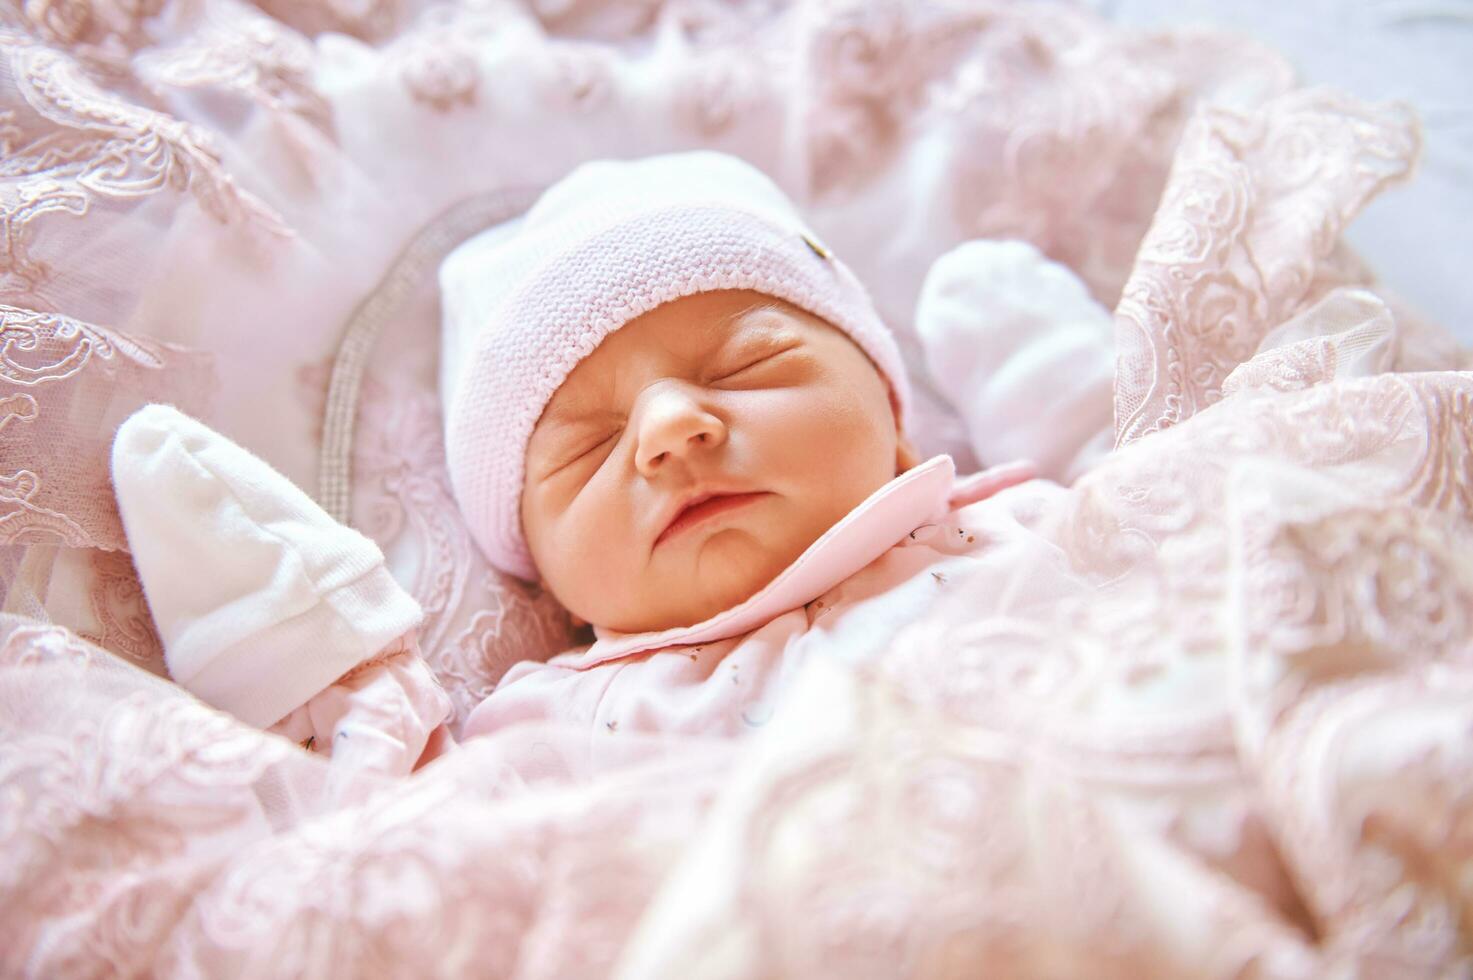 Close up portrait of adorable sleeping newborn baby girl photo